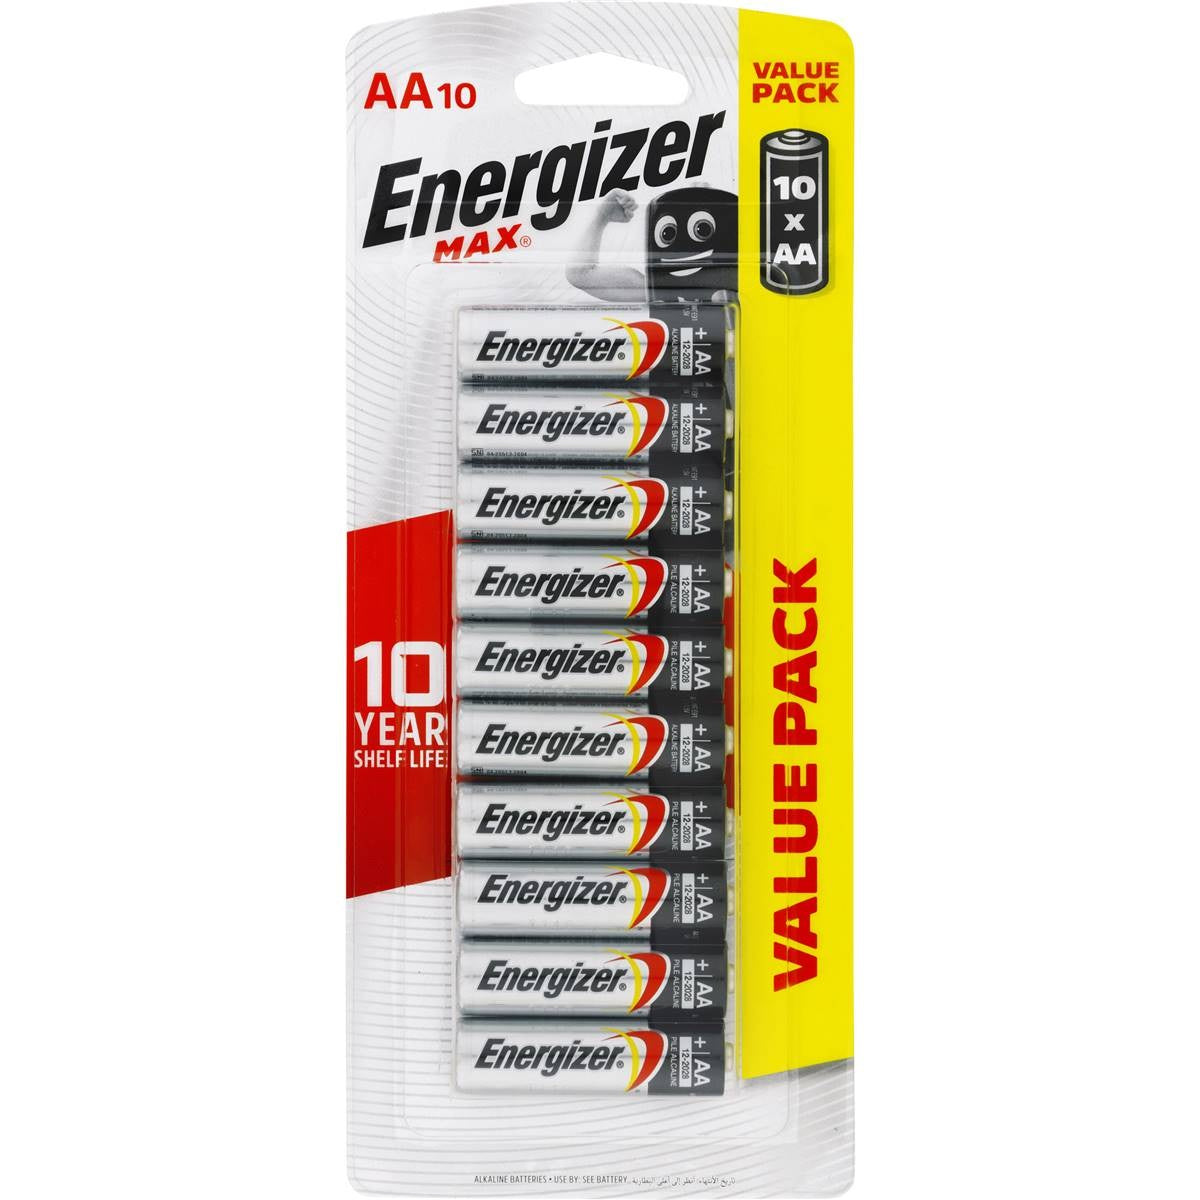 Energizer Max Batteries AA 10pk